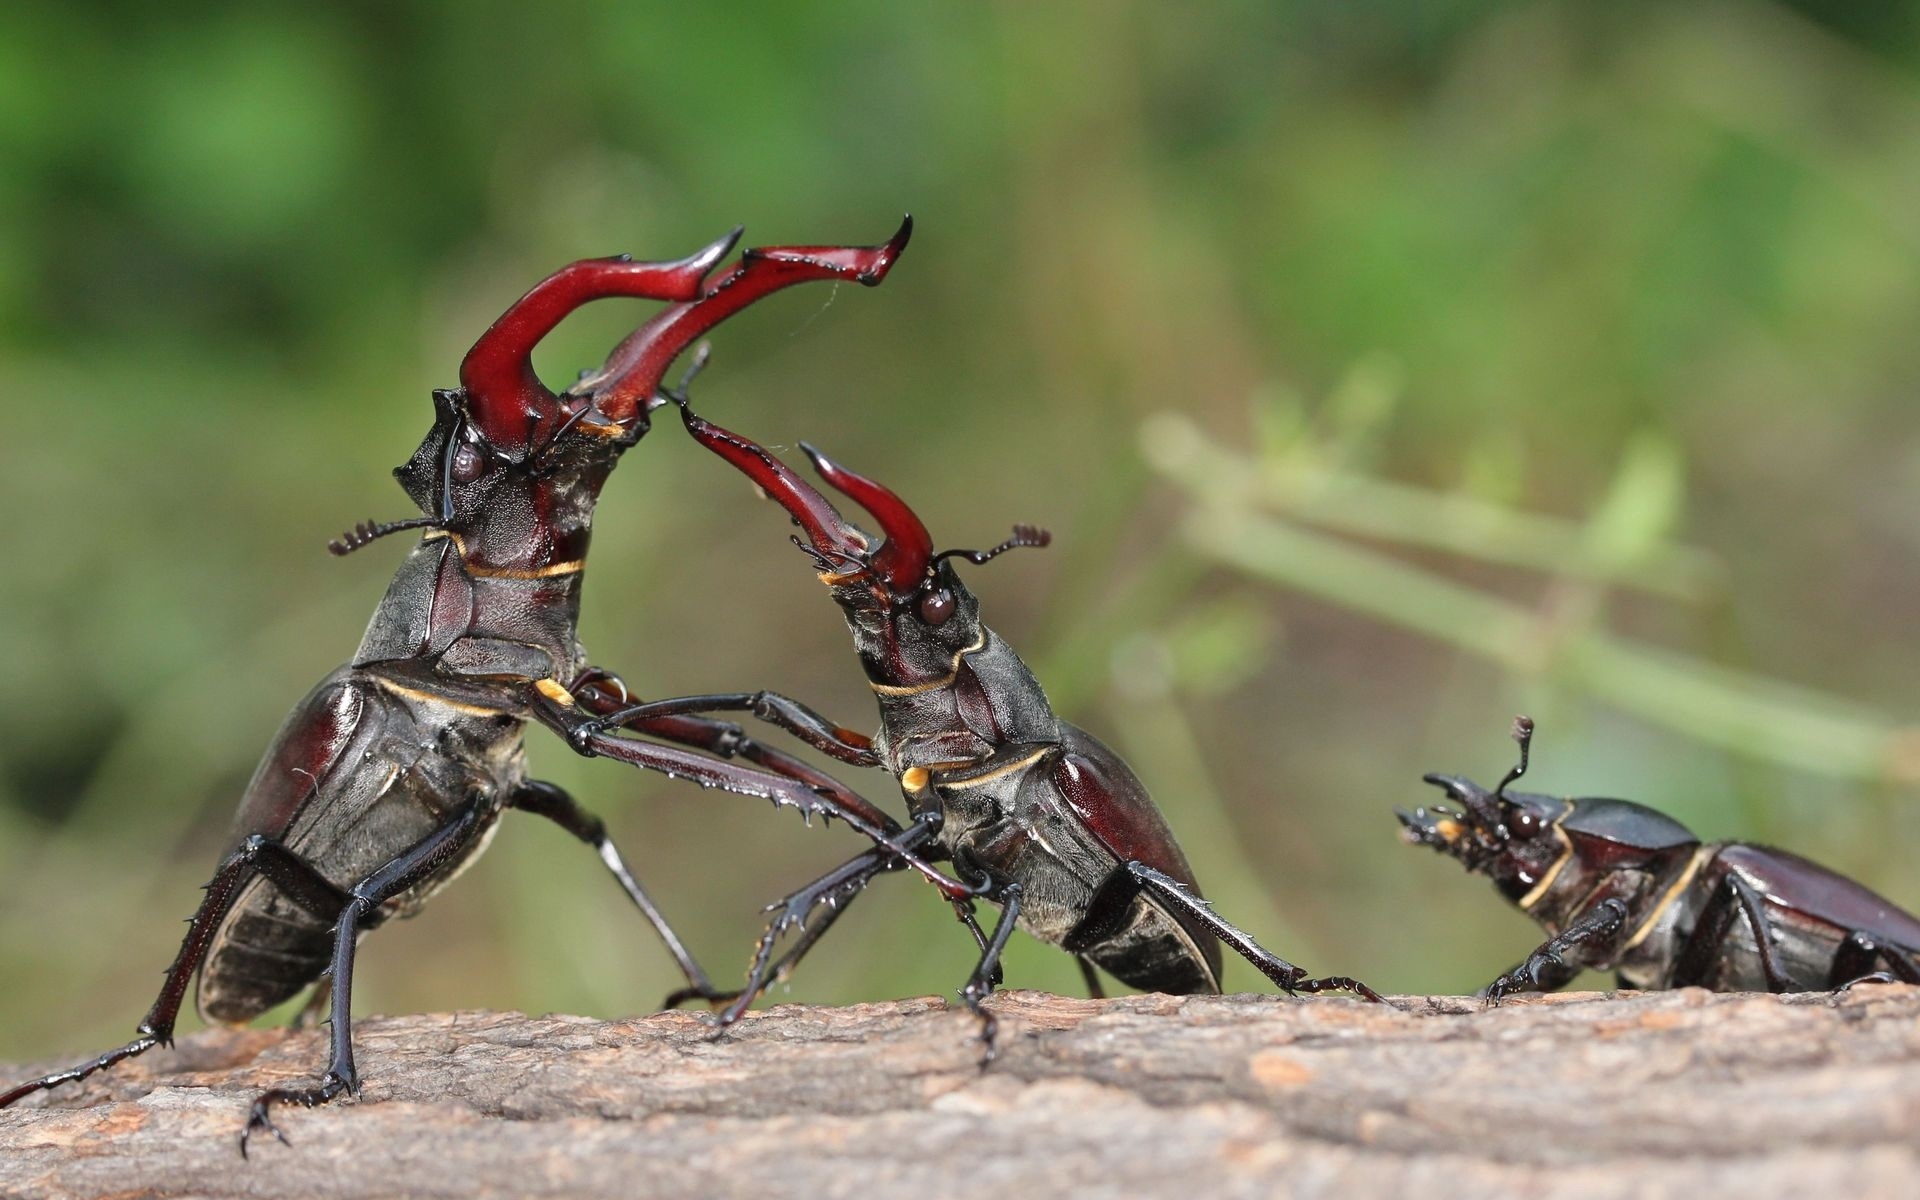 Battle of deer beetles for the female